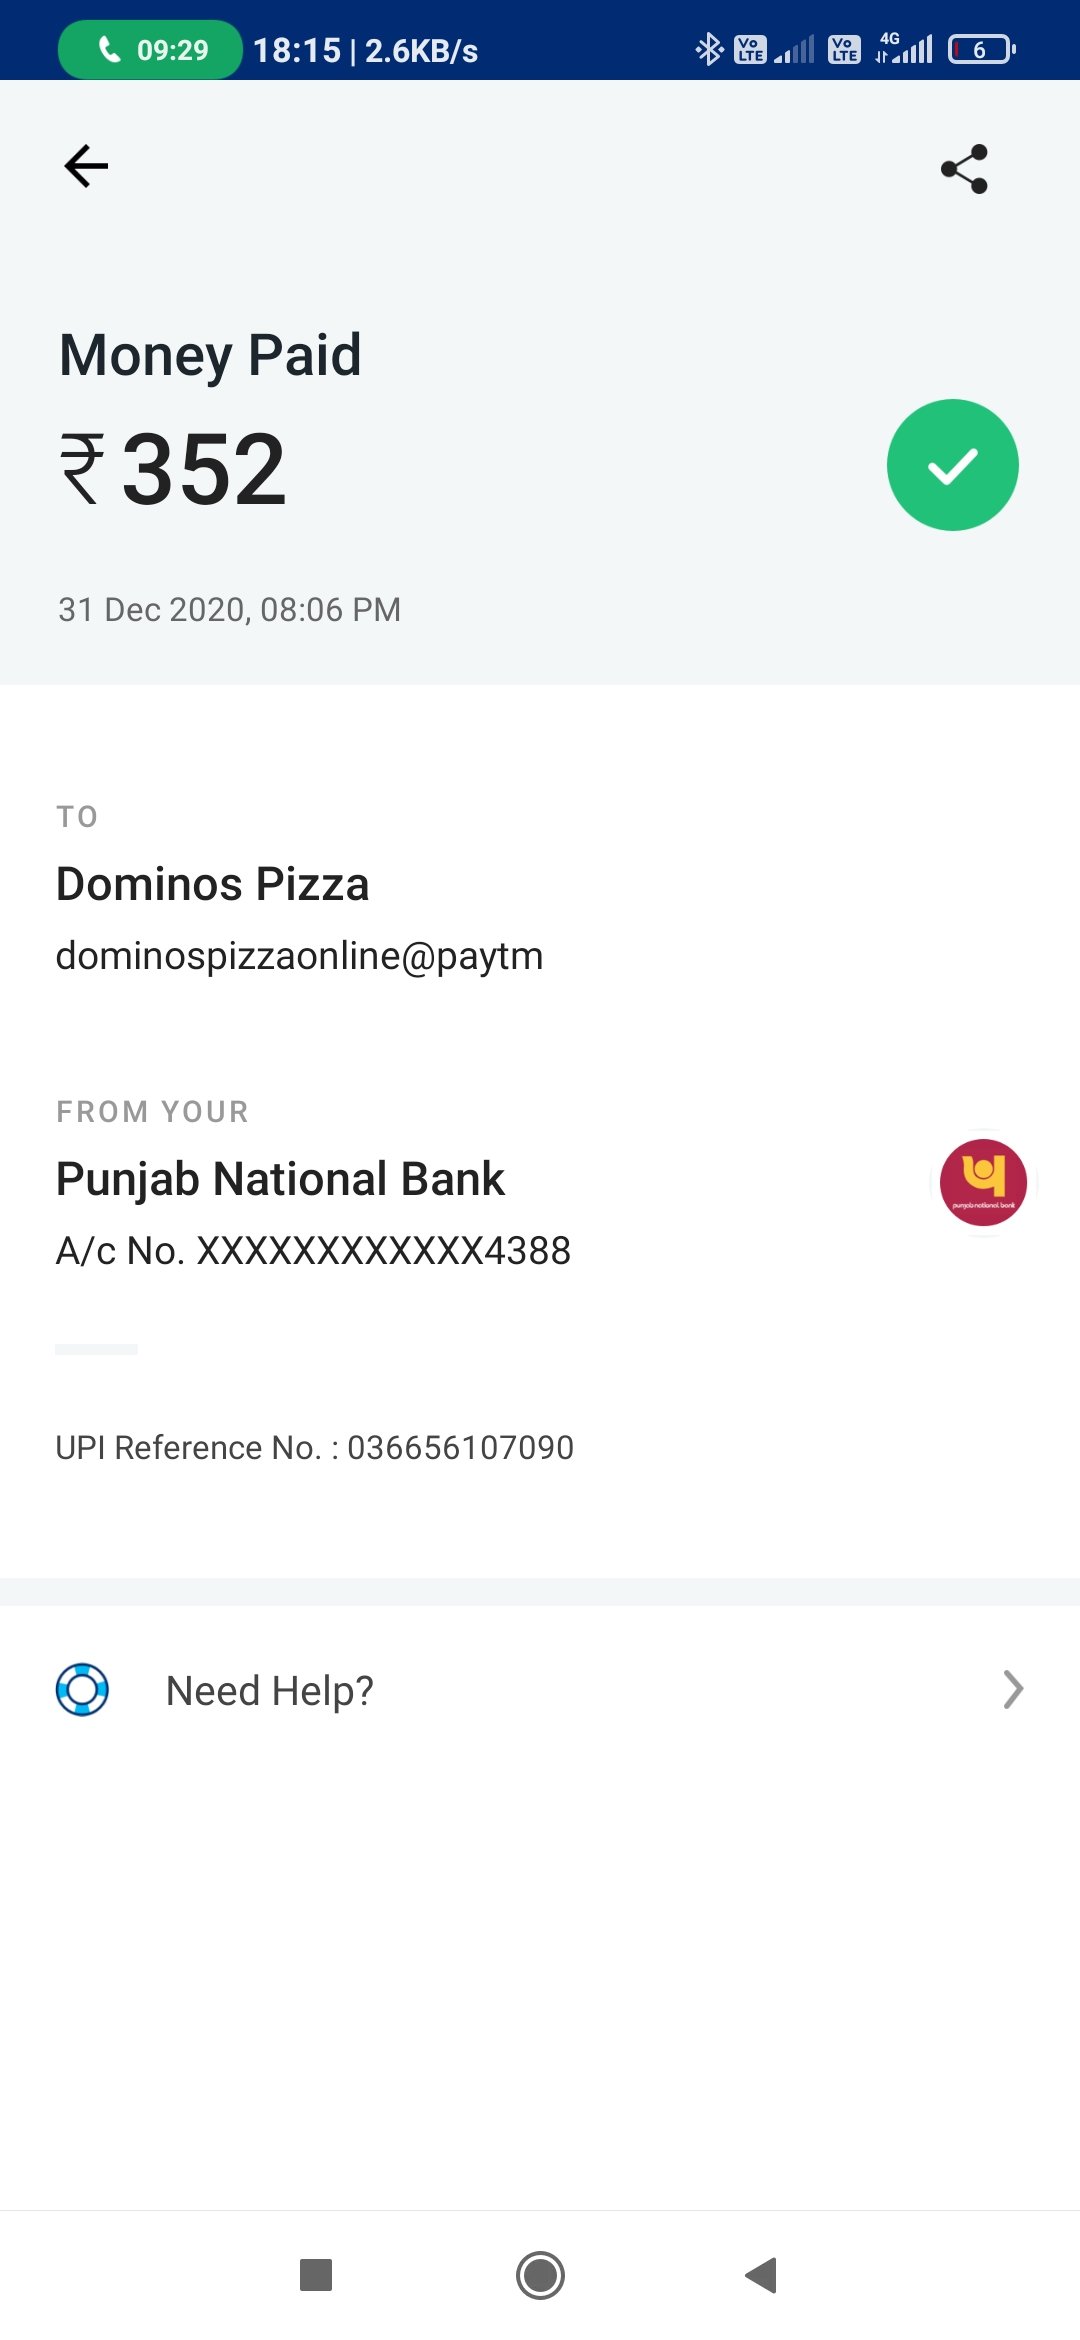 Dominos Pizza complaint Refund of Money